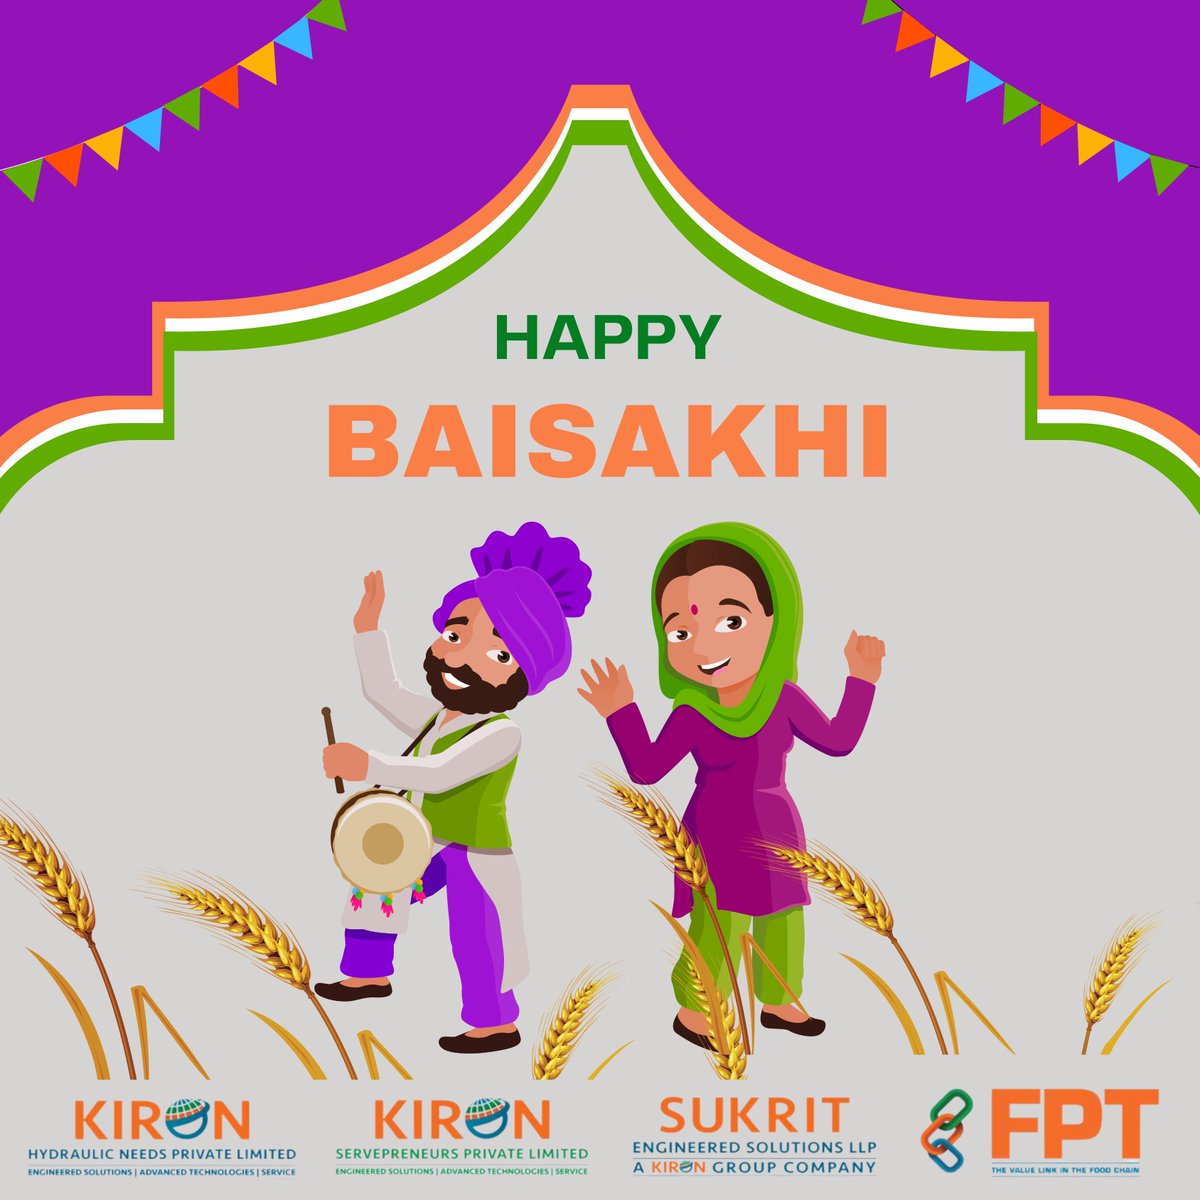 🌾 Happy Baisakhi 2024 from all of us at Kiron Food Processing Technologies! 🎉

#HappyBaisakhi #HarvestFestival #Vaisakhi #Baisakhi2024 #CulturalCelebration 🌾🎊